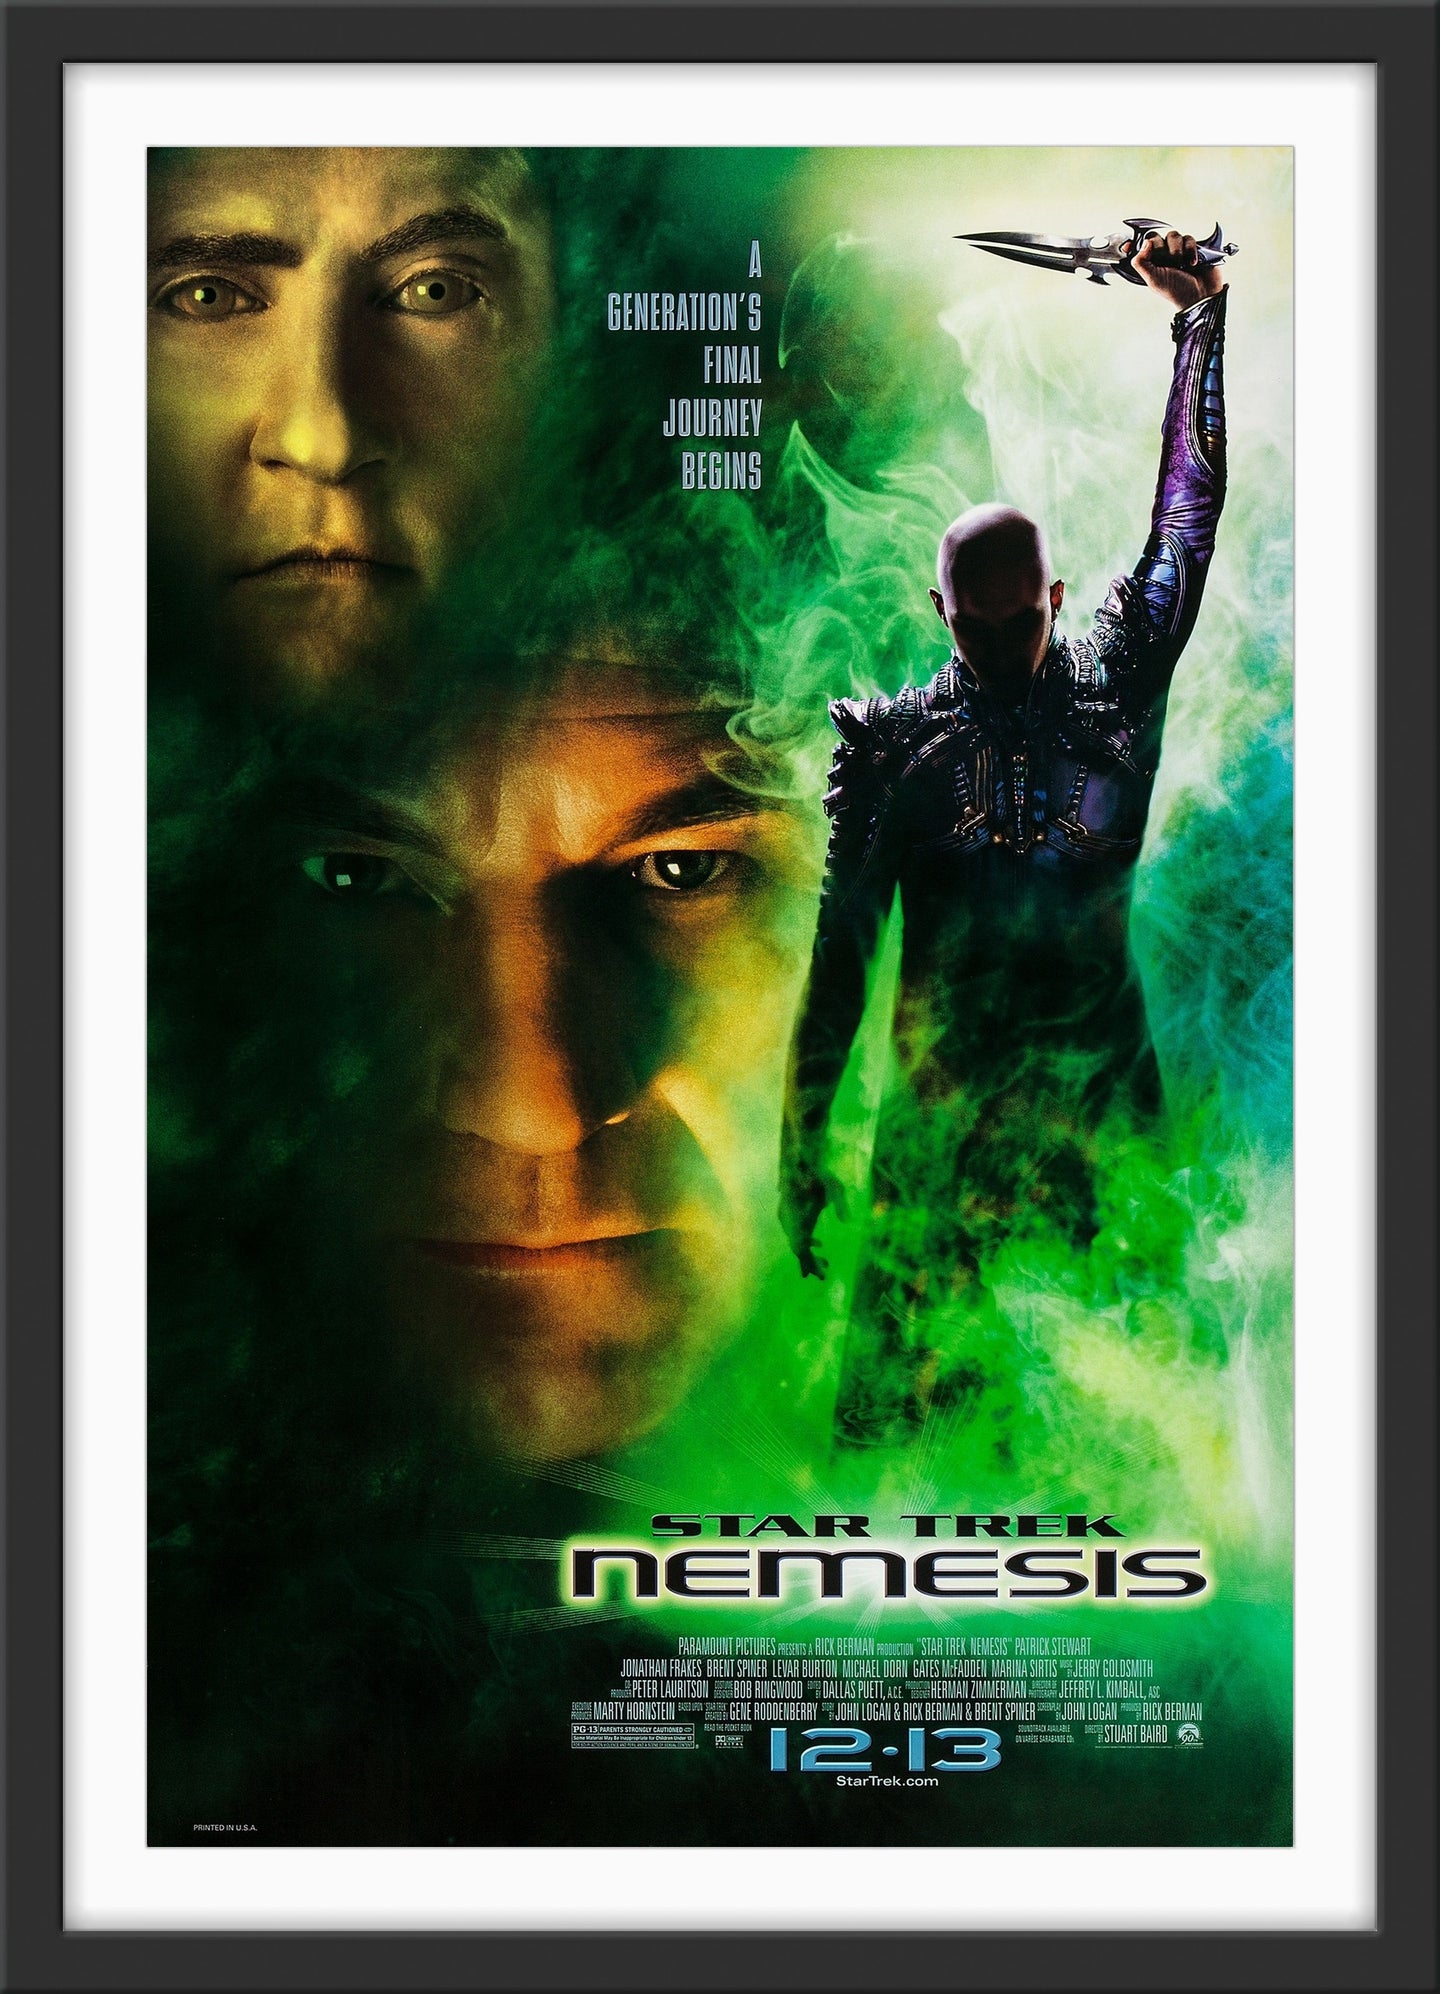 An original movie poster for the film Star Trek: Nemesis